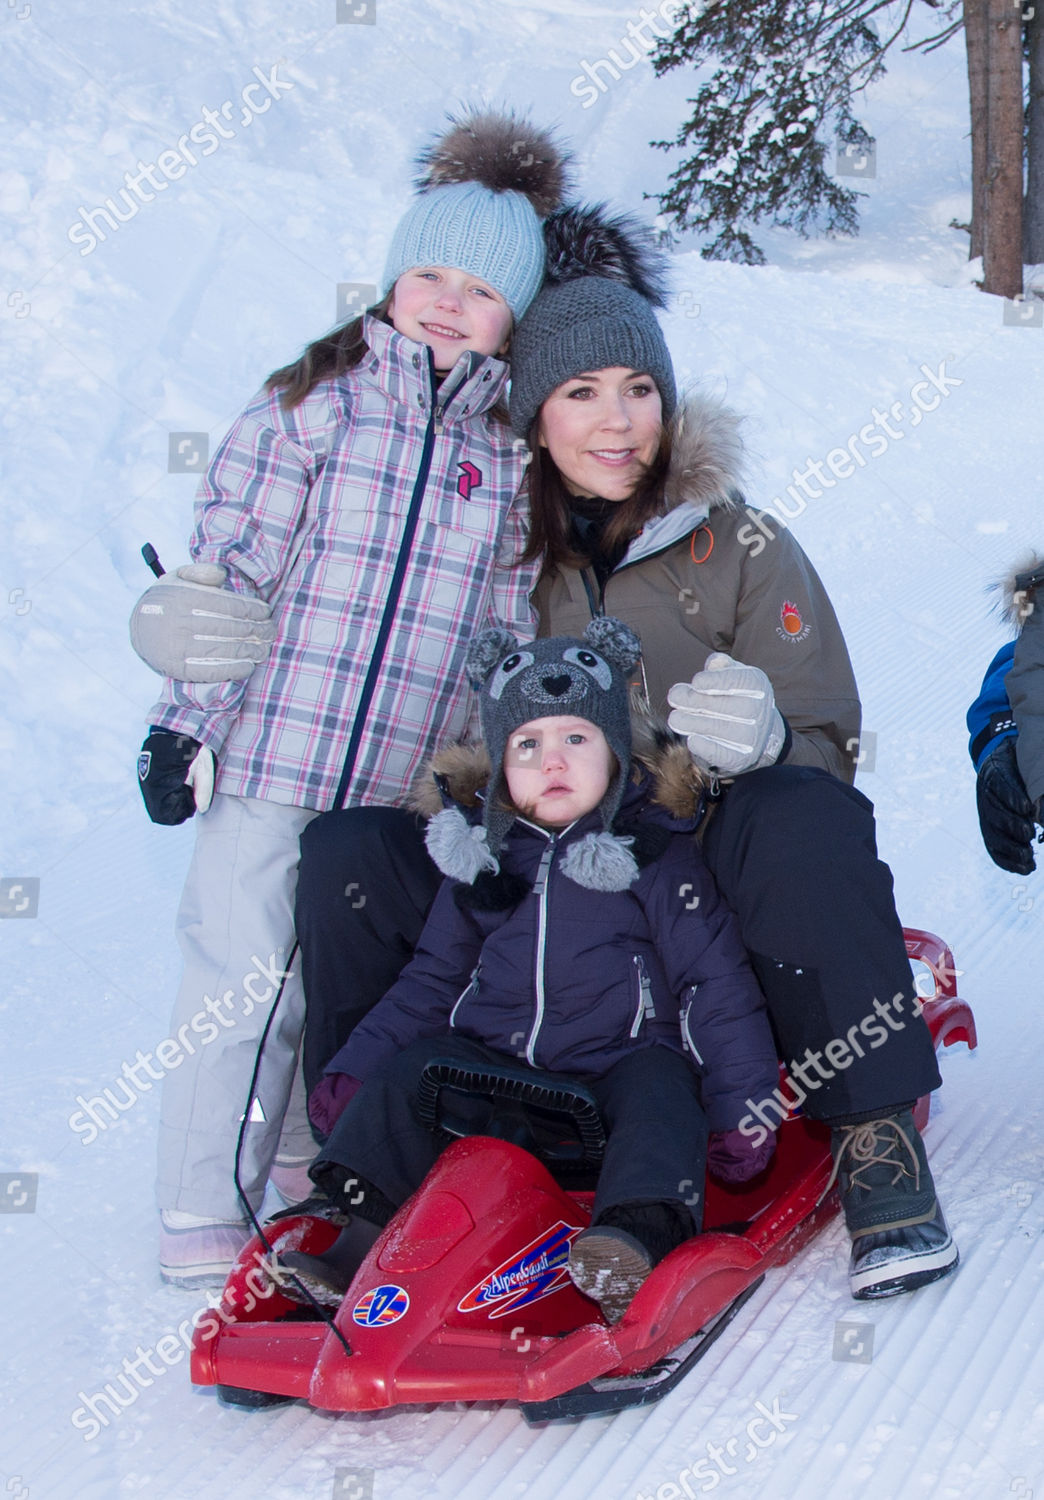 danish-royals-photocall-on-their-skiing-holiday-verbier-ski-resort-switzerland-shutterstock-editorial-2132396f.jpg